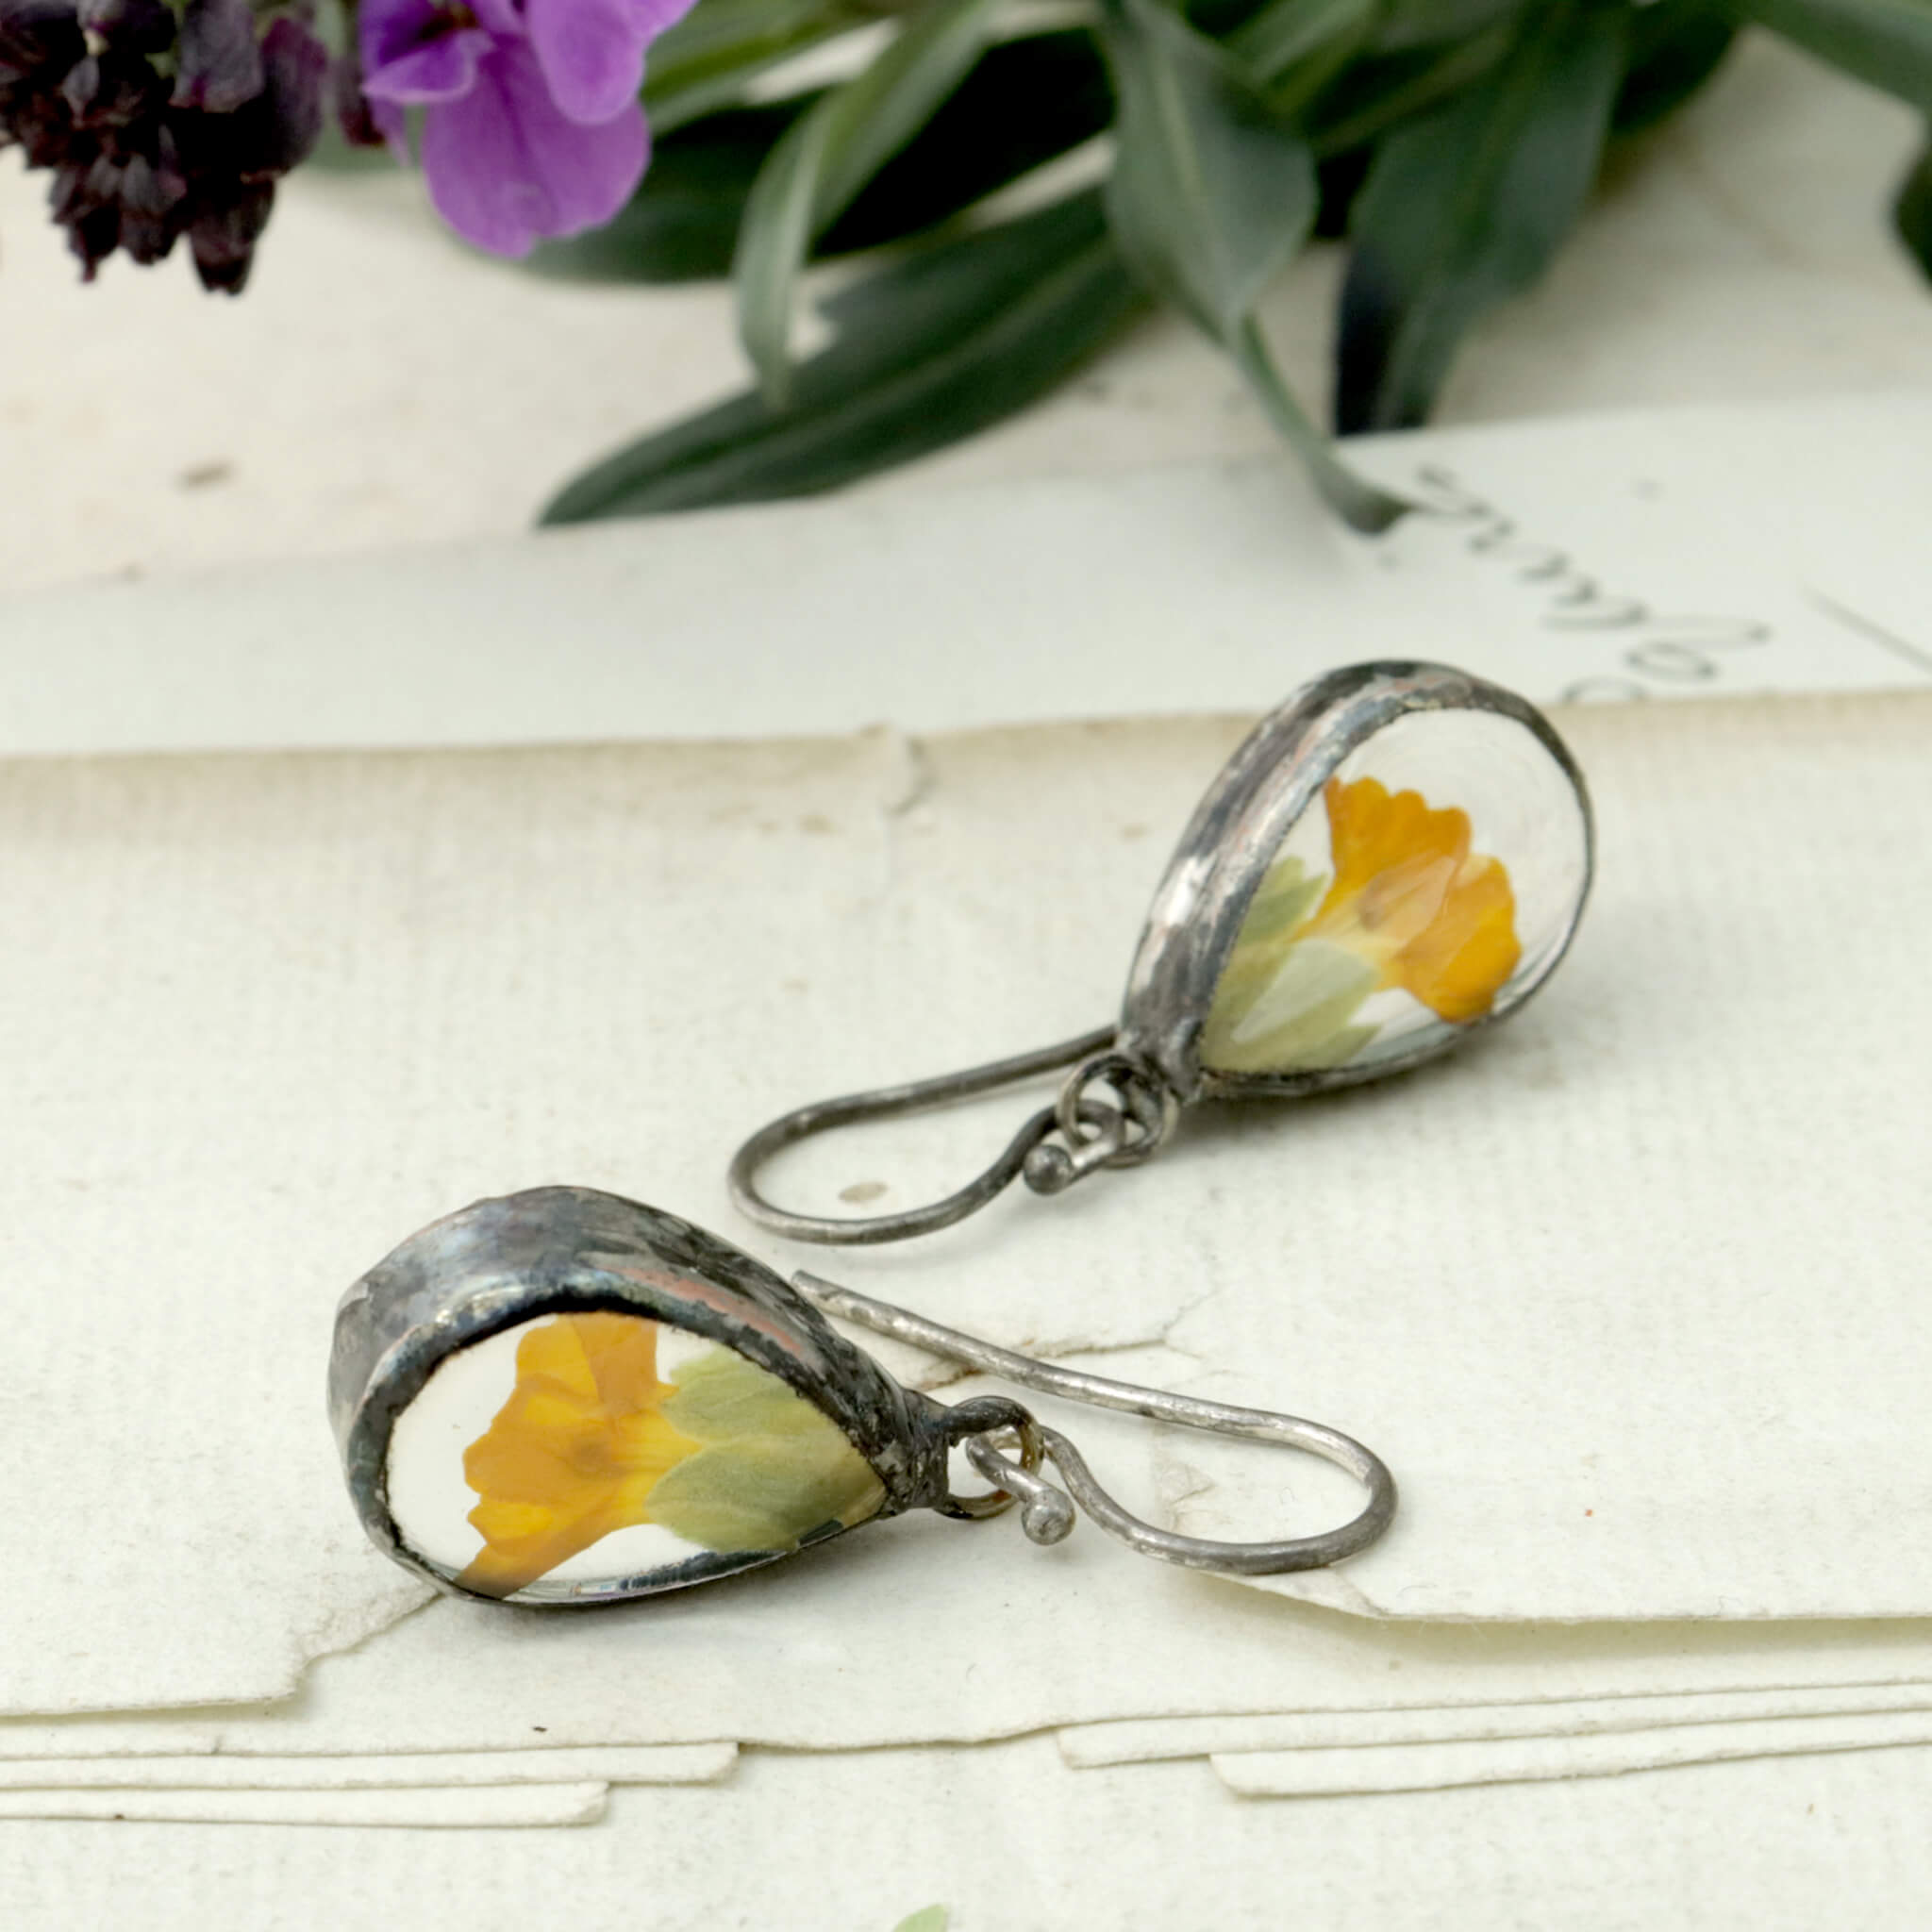 Primroses in soldered glass earrings lying on an old letter